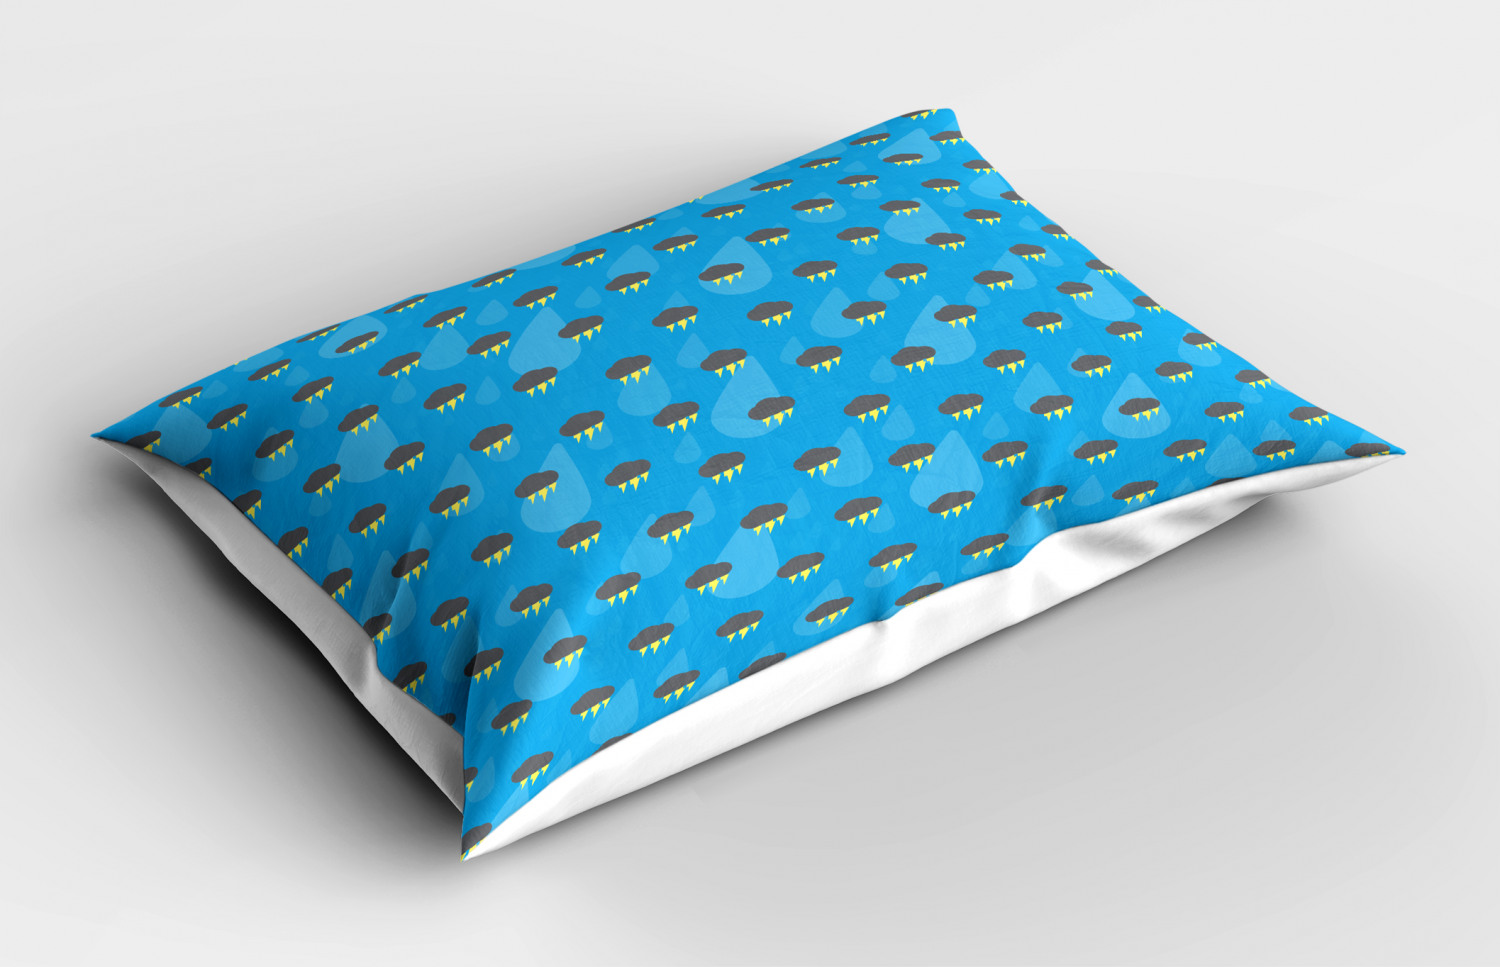 Details about   Thunder Pillow Sham Decorative Pillowcase 3 Sizes for Bedroom Decor 